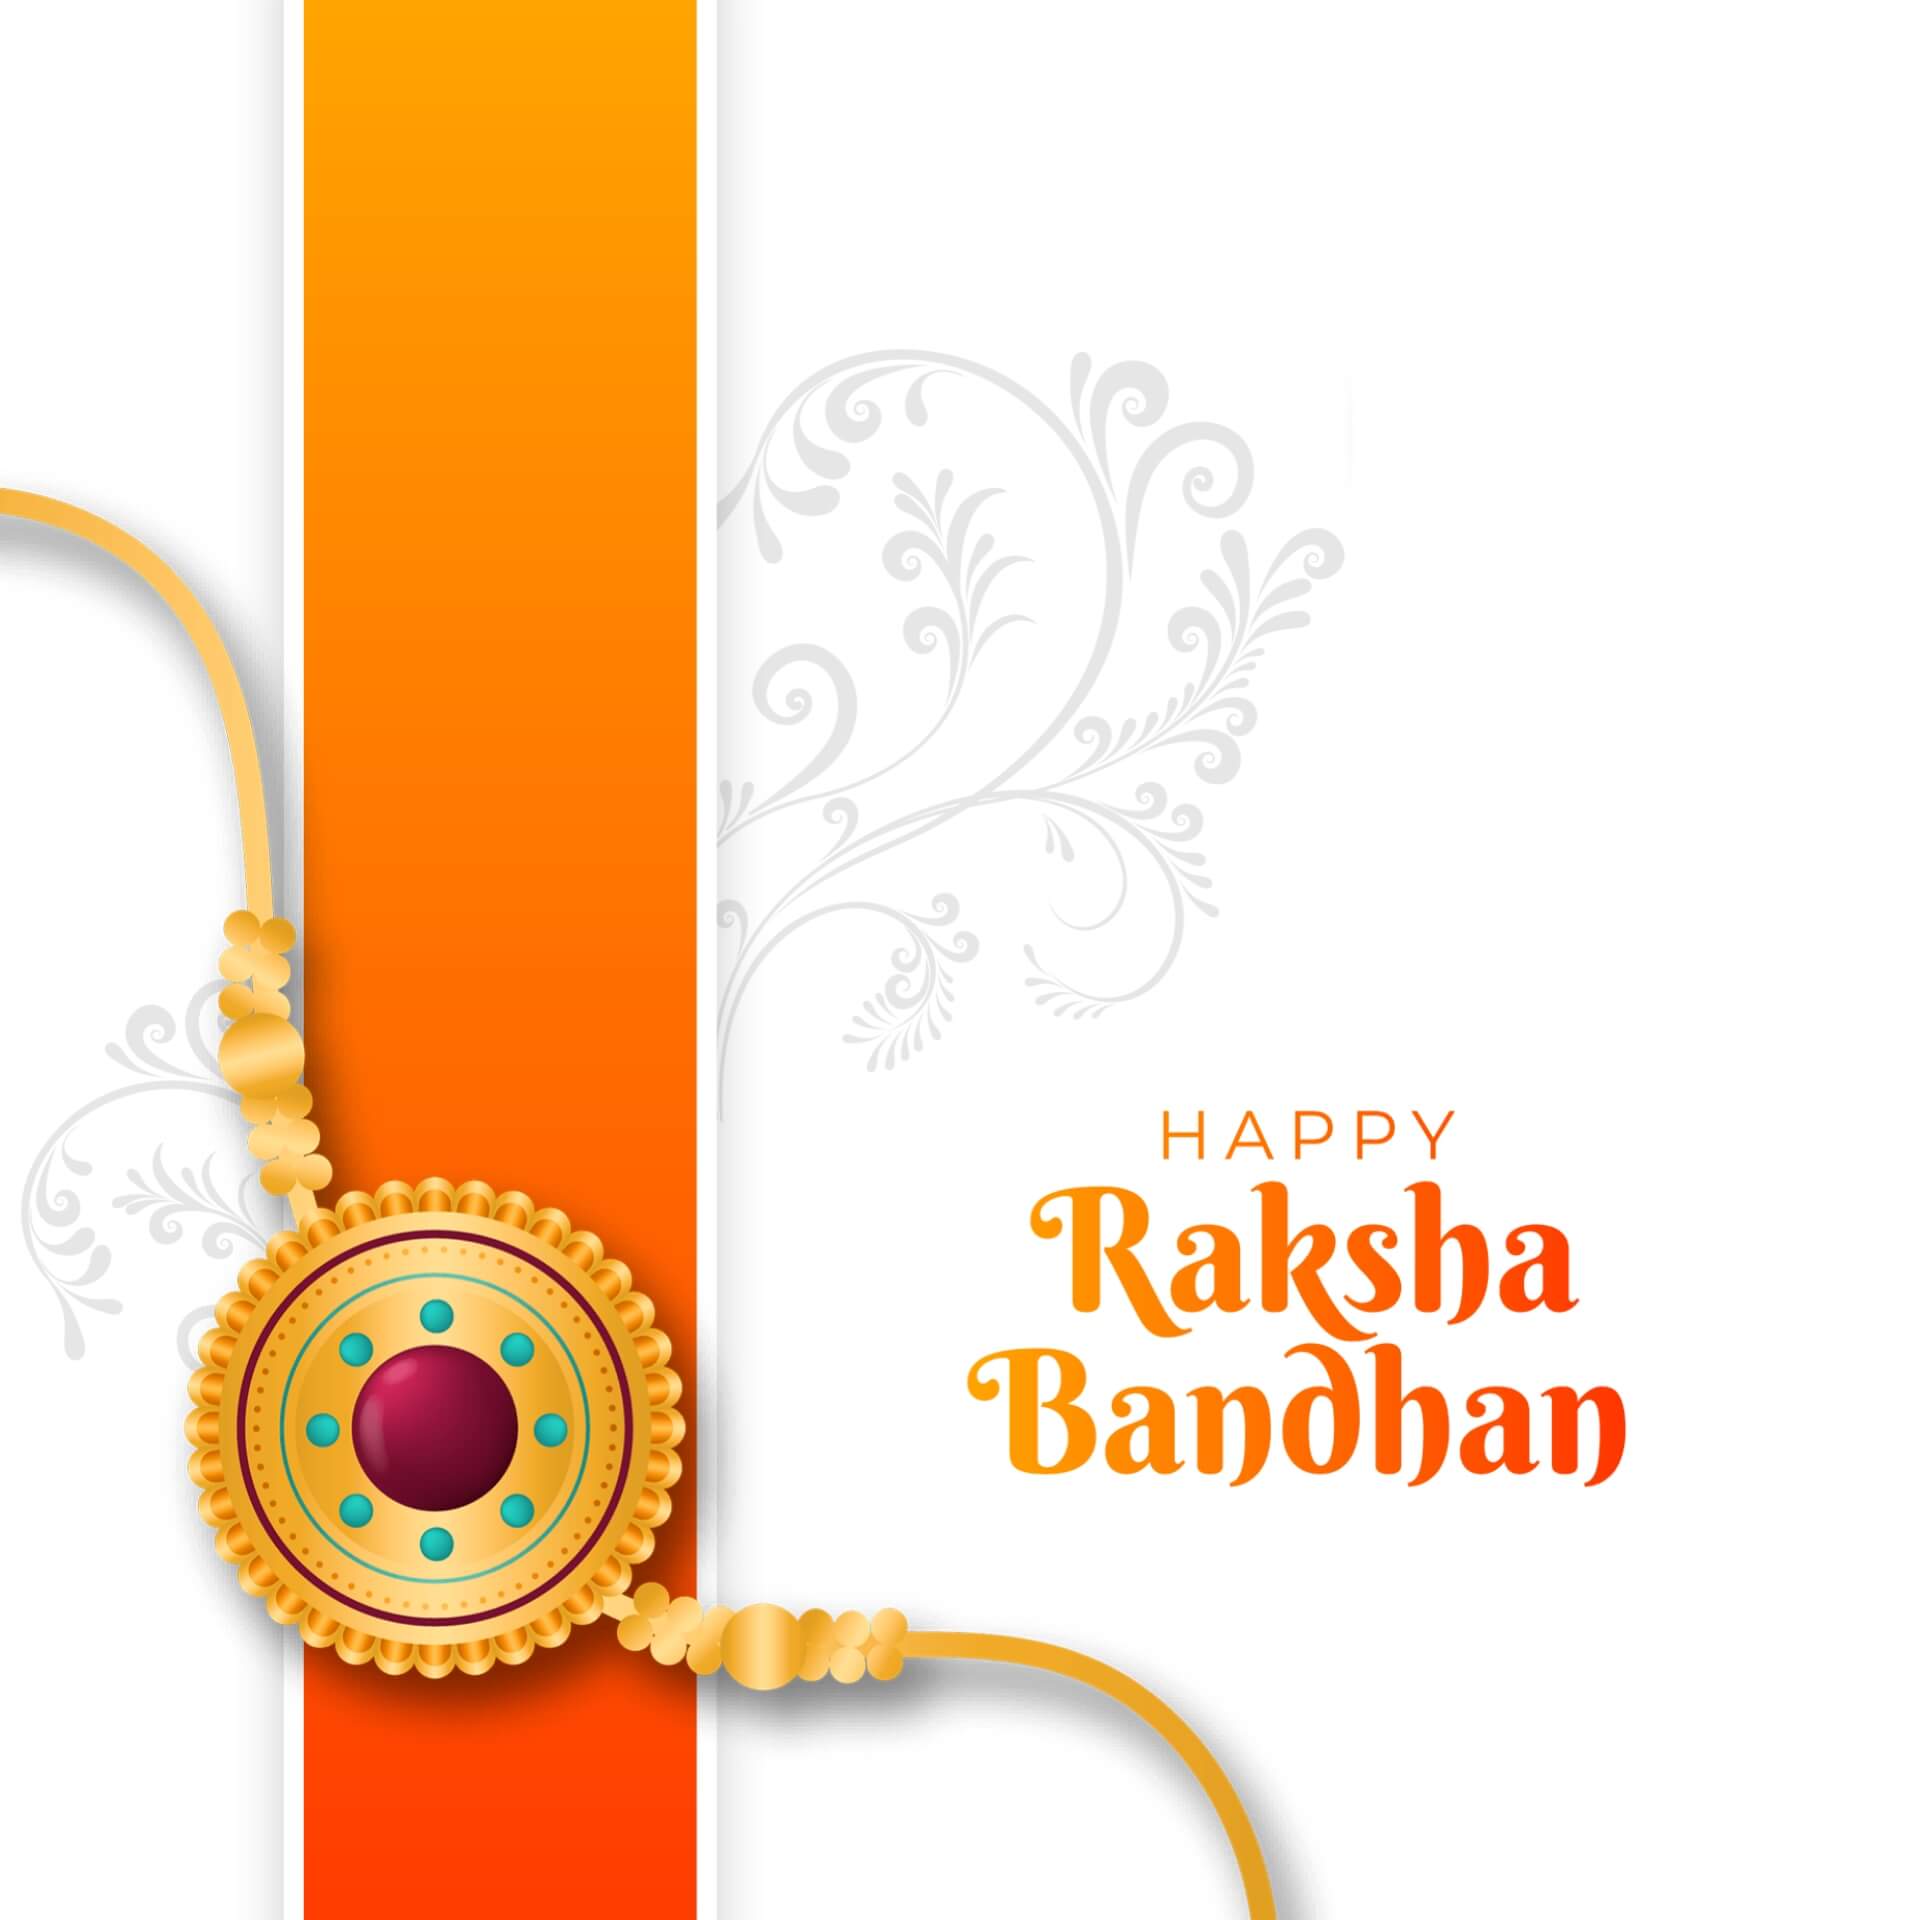 Hd Happy Raksha Bandhan Image